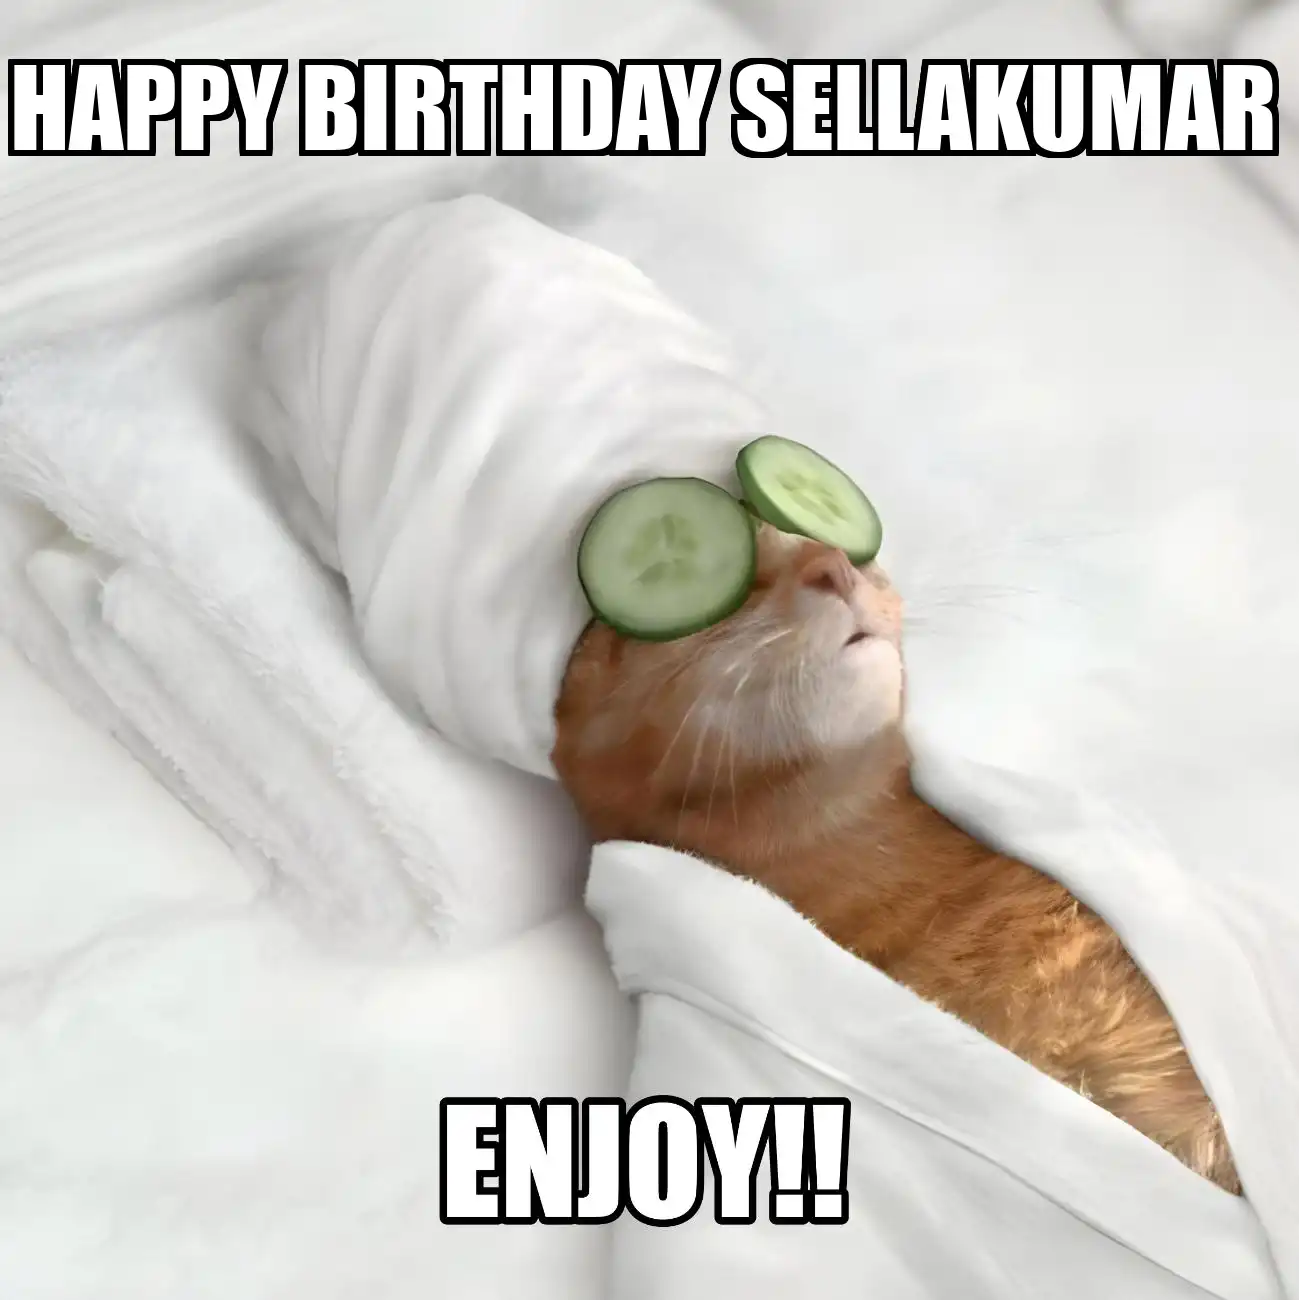 Happy Birthday Sellakumar Enjoy Cat Meme